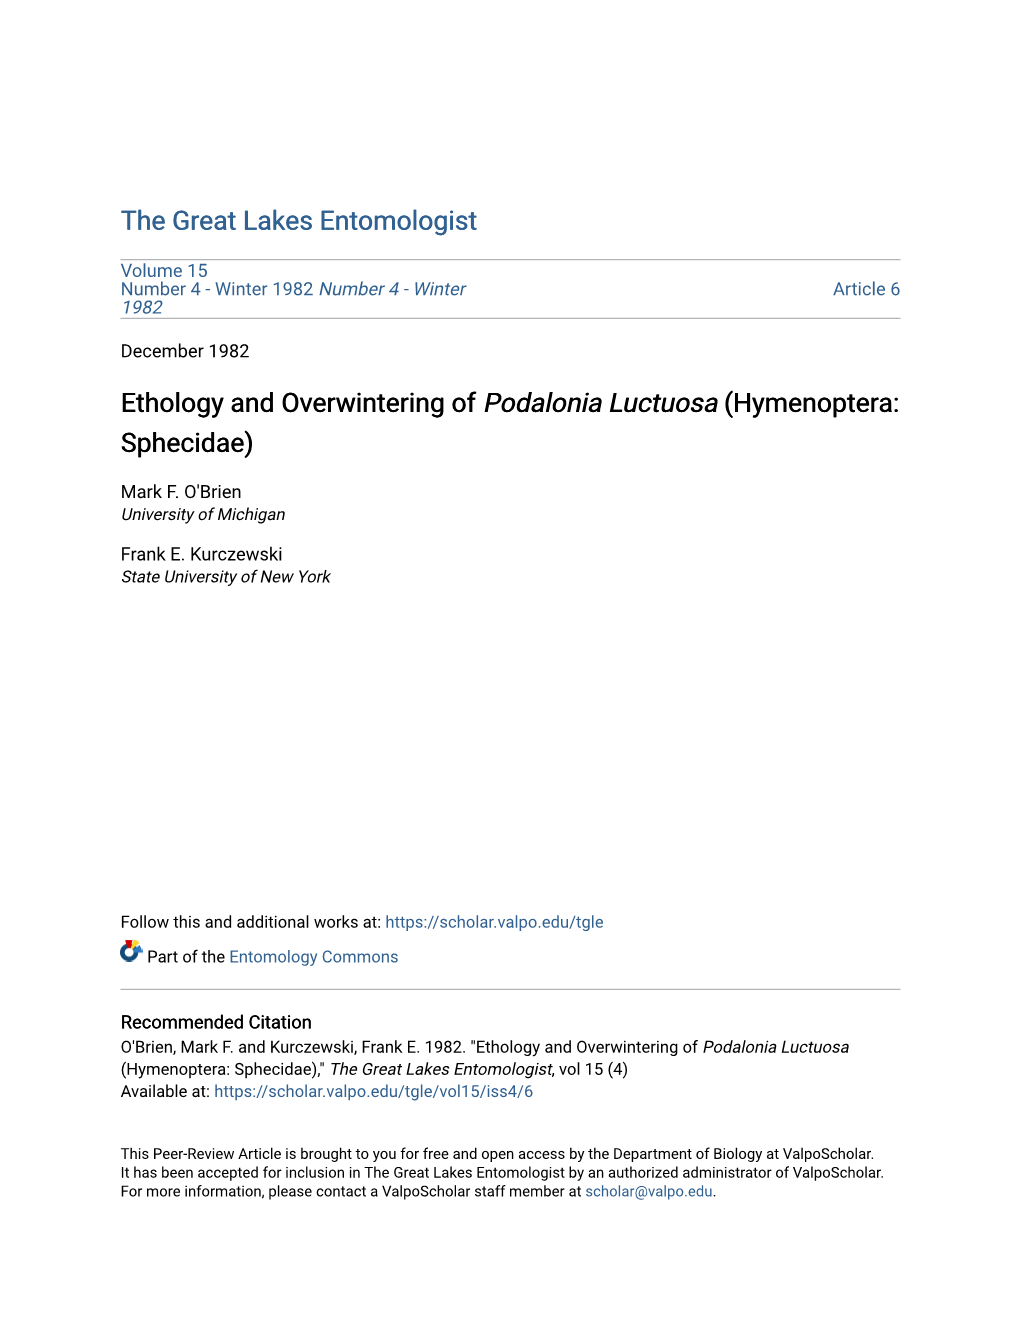 Ethology and Overwintering of Podalonia Luctuosa (Hymenoptera: Sphecidae)